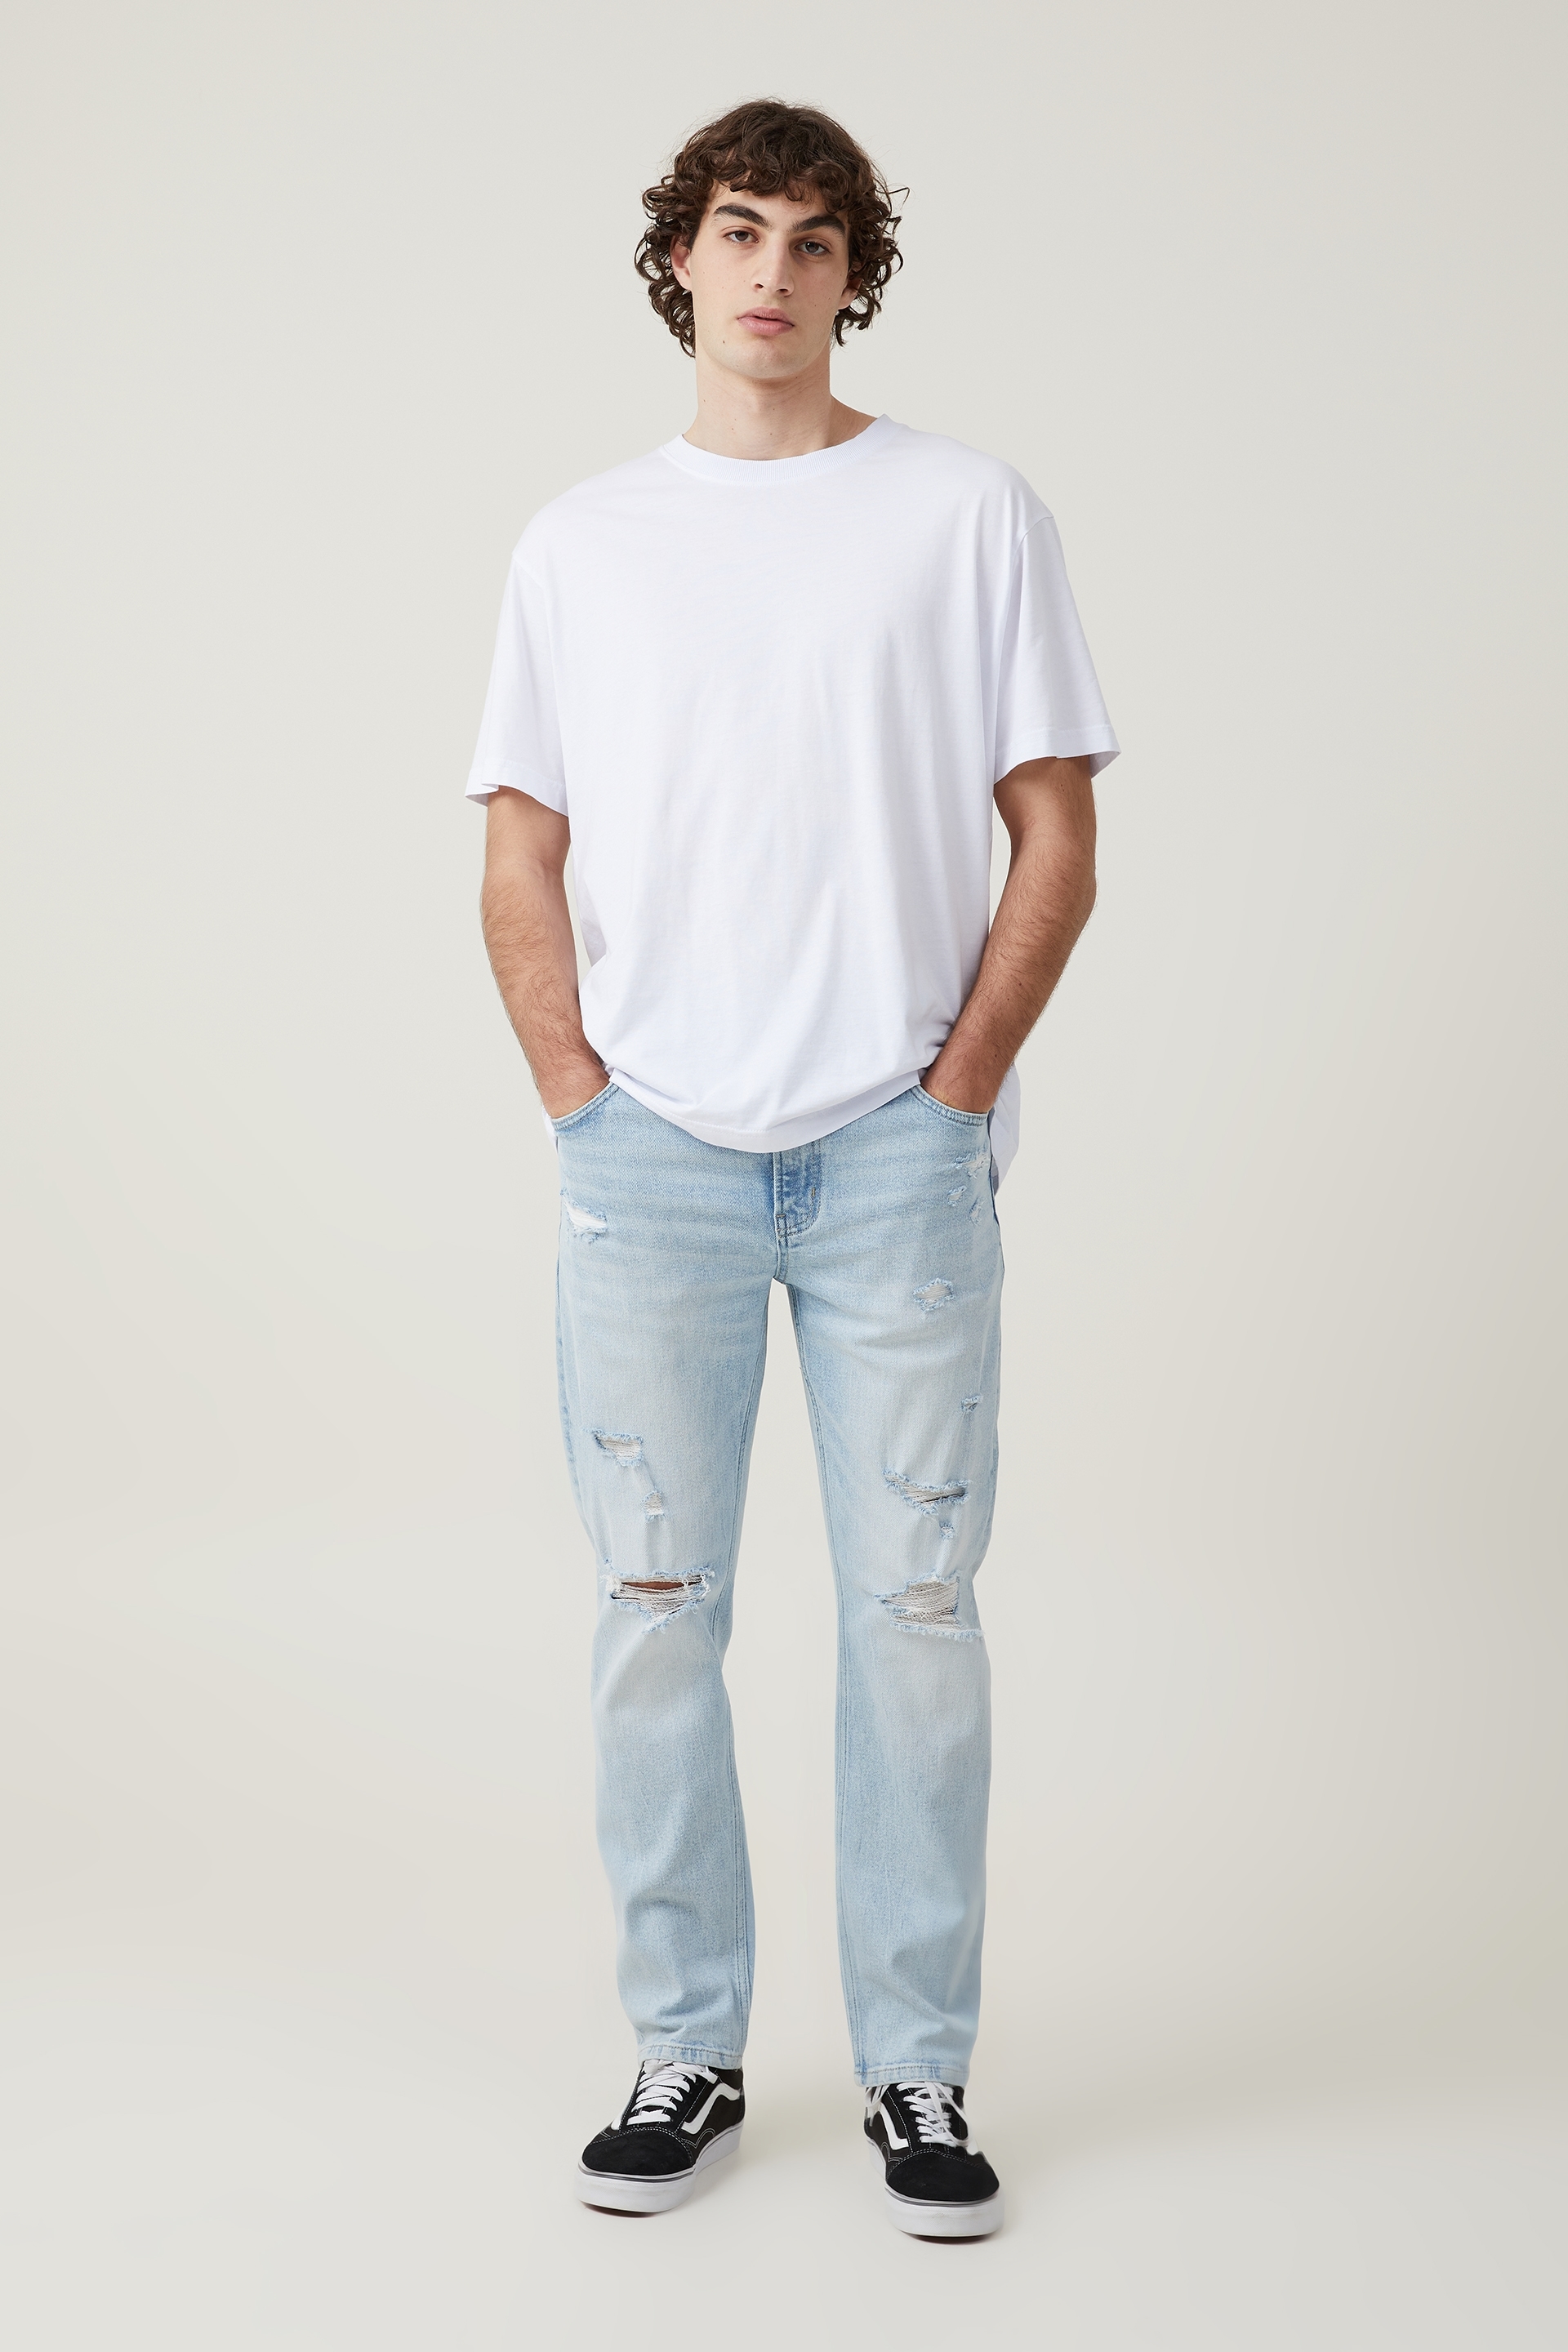 Cotton On Men - Slim Straight Jean - Venice blue ripped